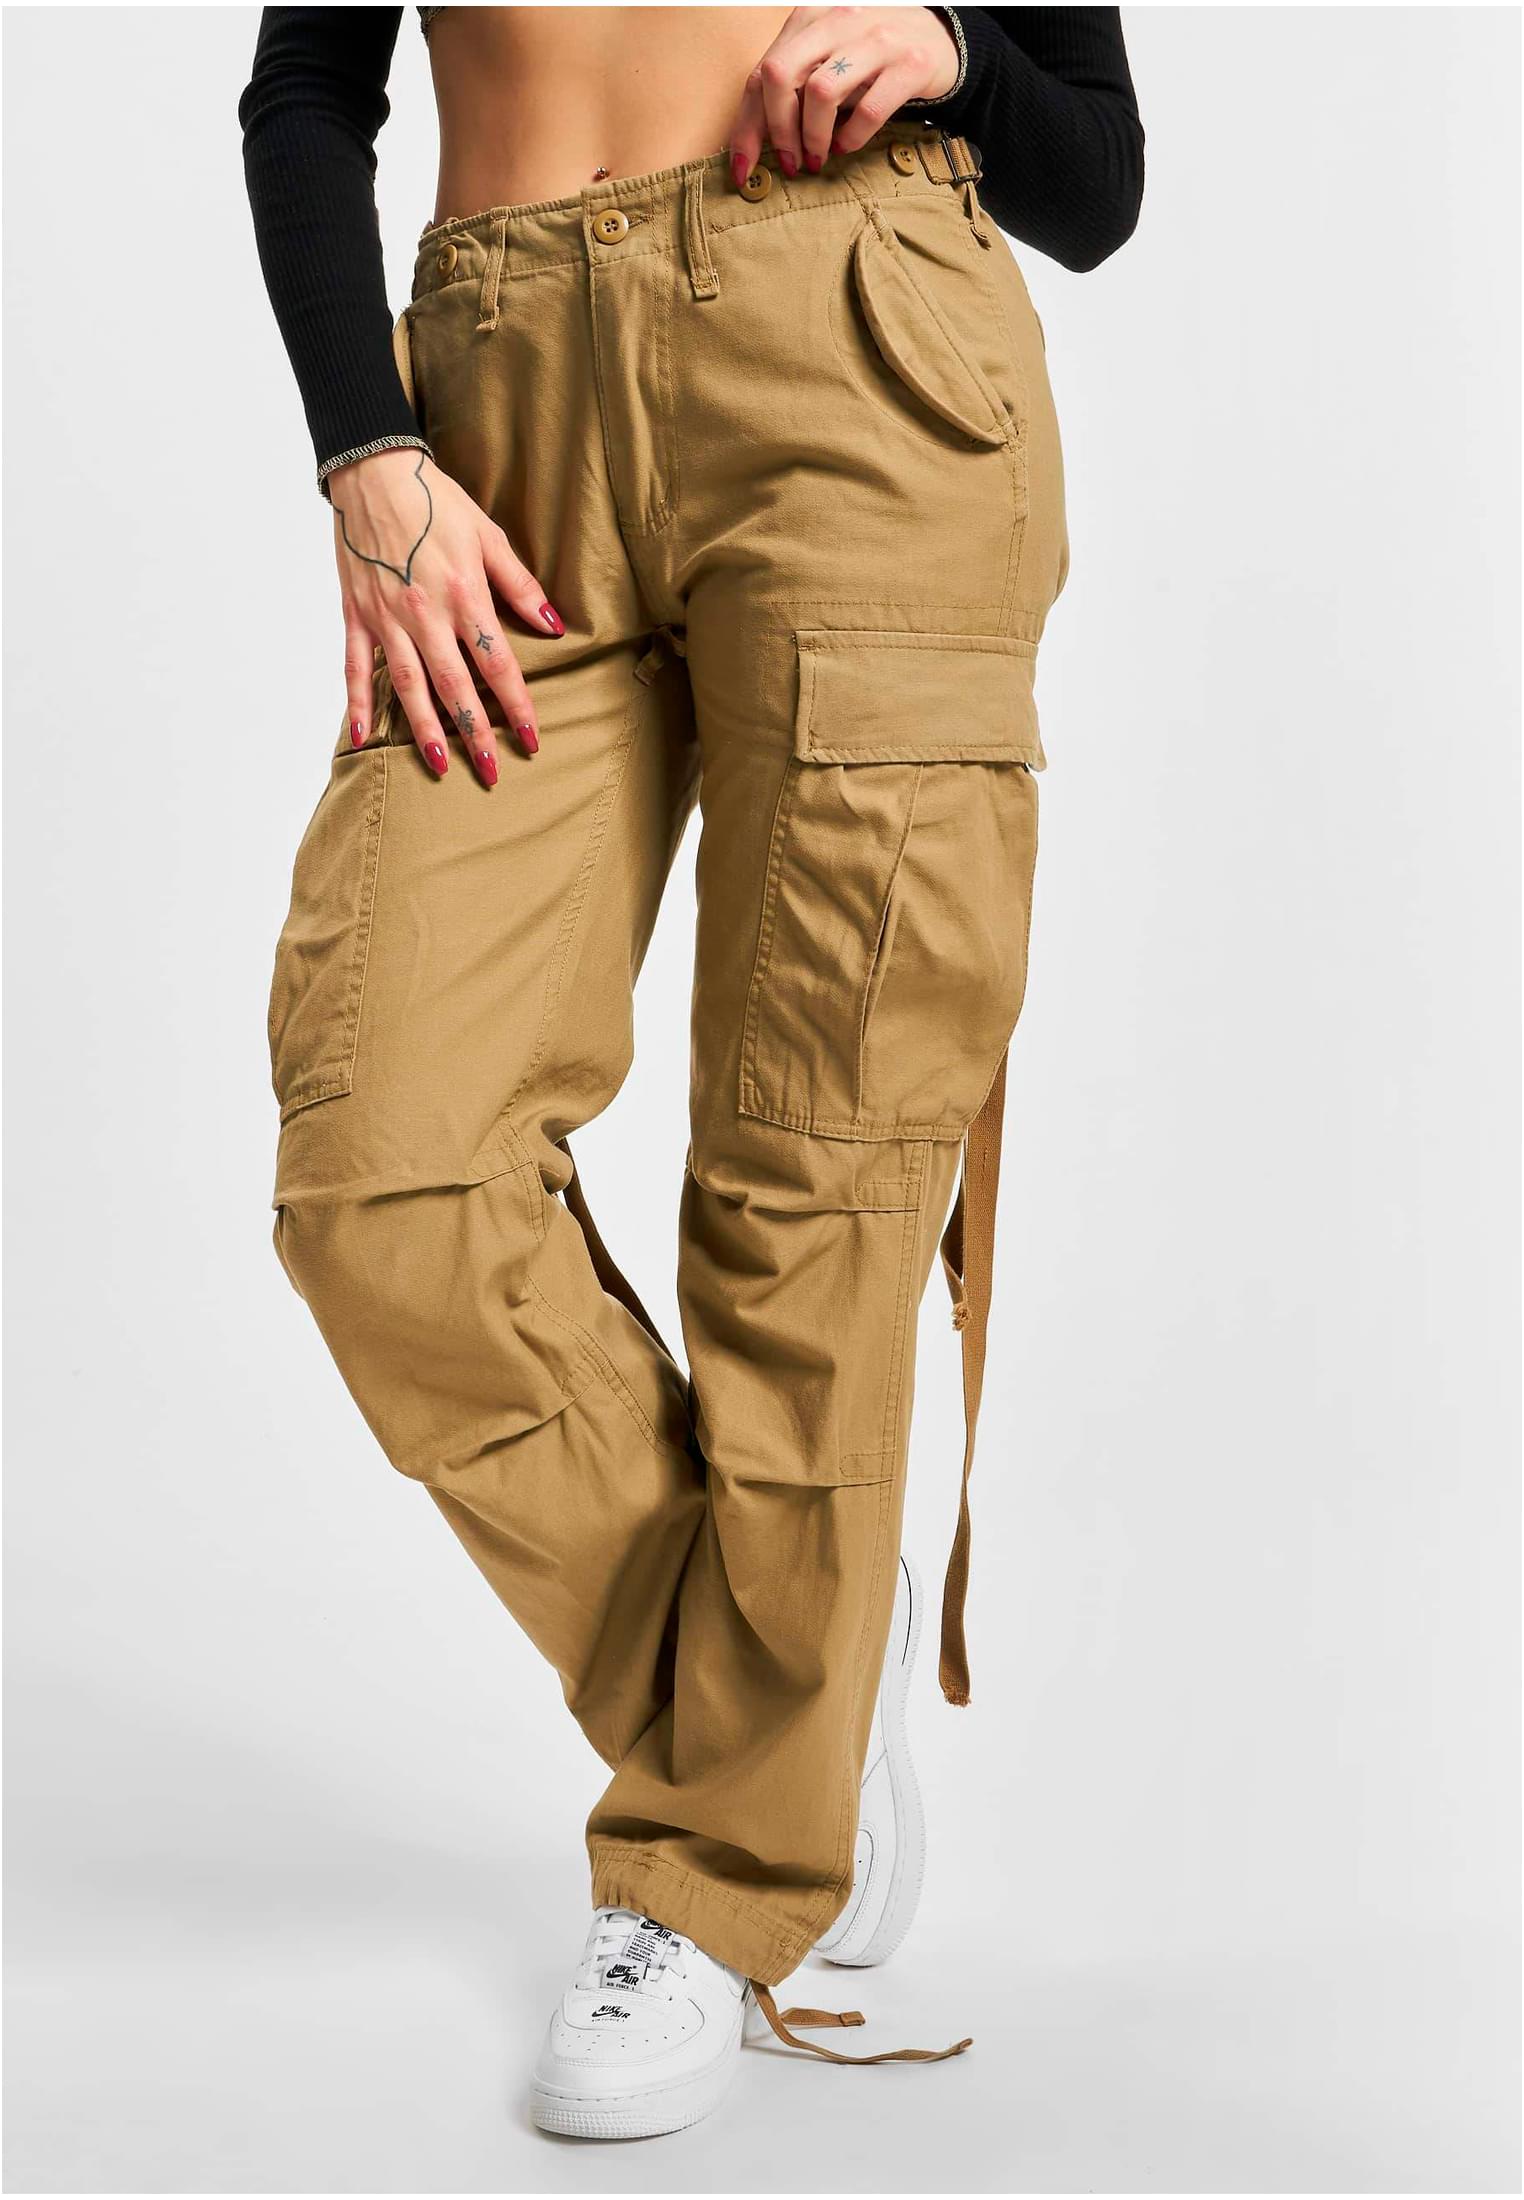 Women's Camel Pants M-65 Cargo Pants